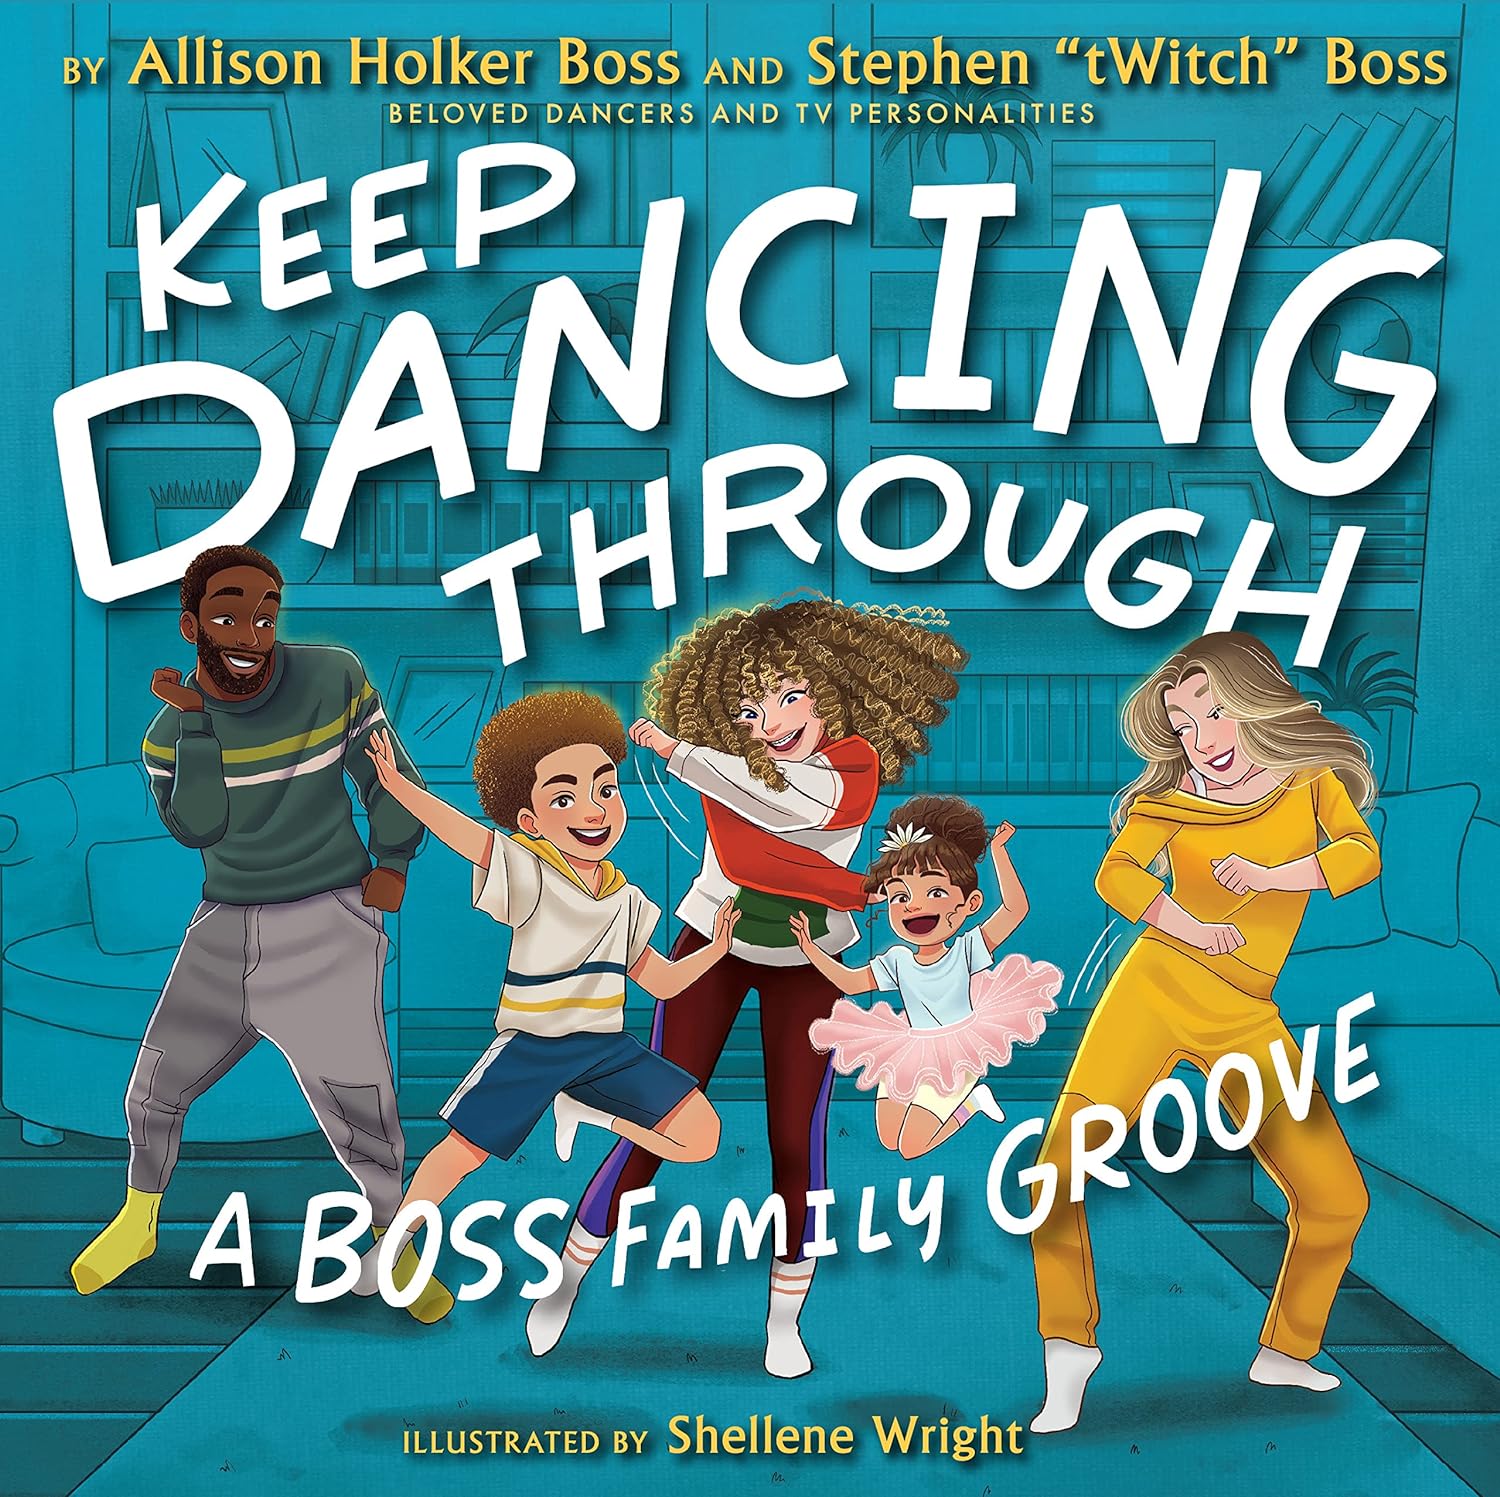 Keep Dancing Through A Boss Family Groove by Allison Holker Boss